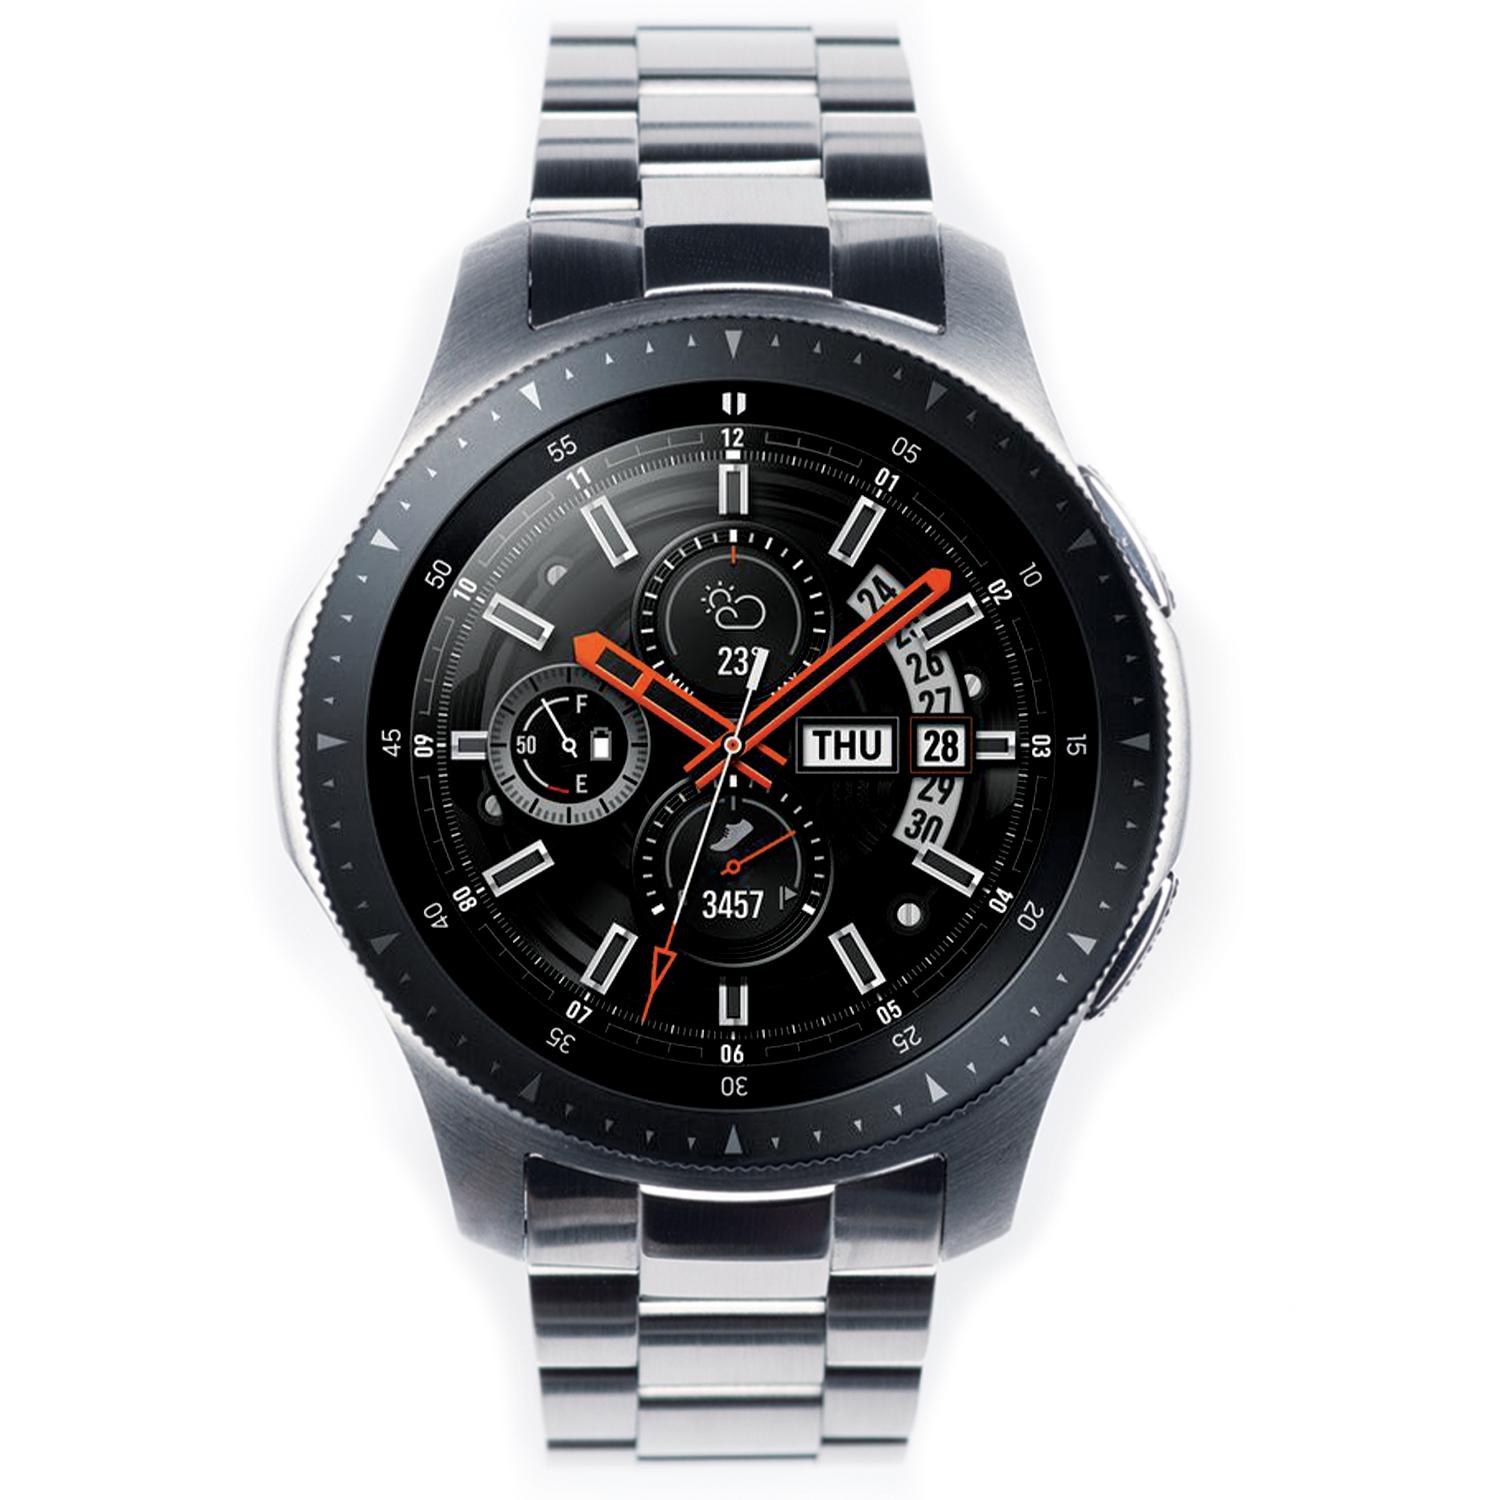 Metal One Cinturino Samsung Galaxy Watch 46mm D'argento